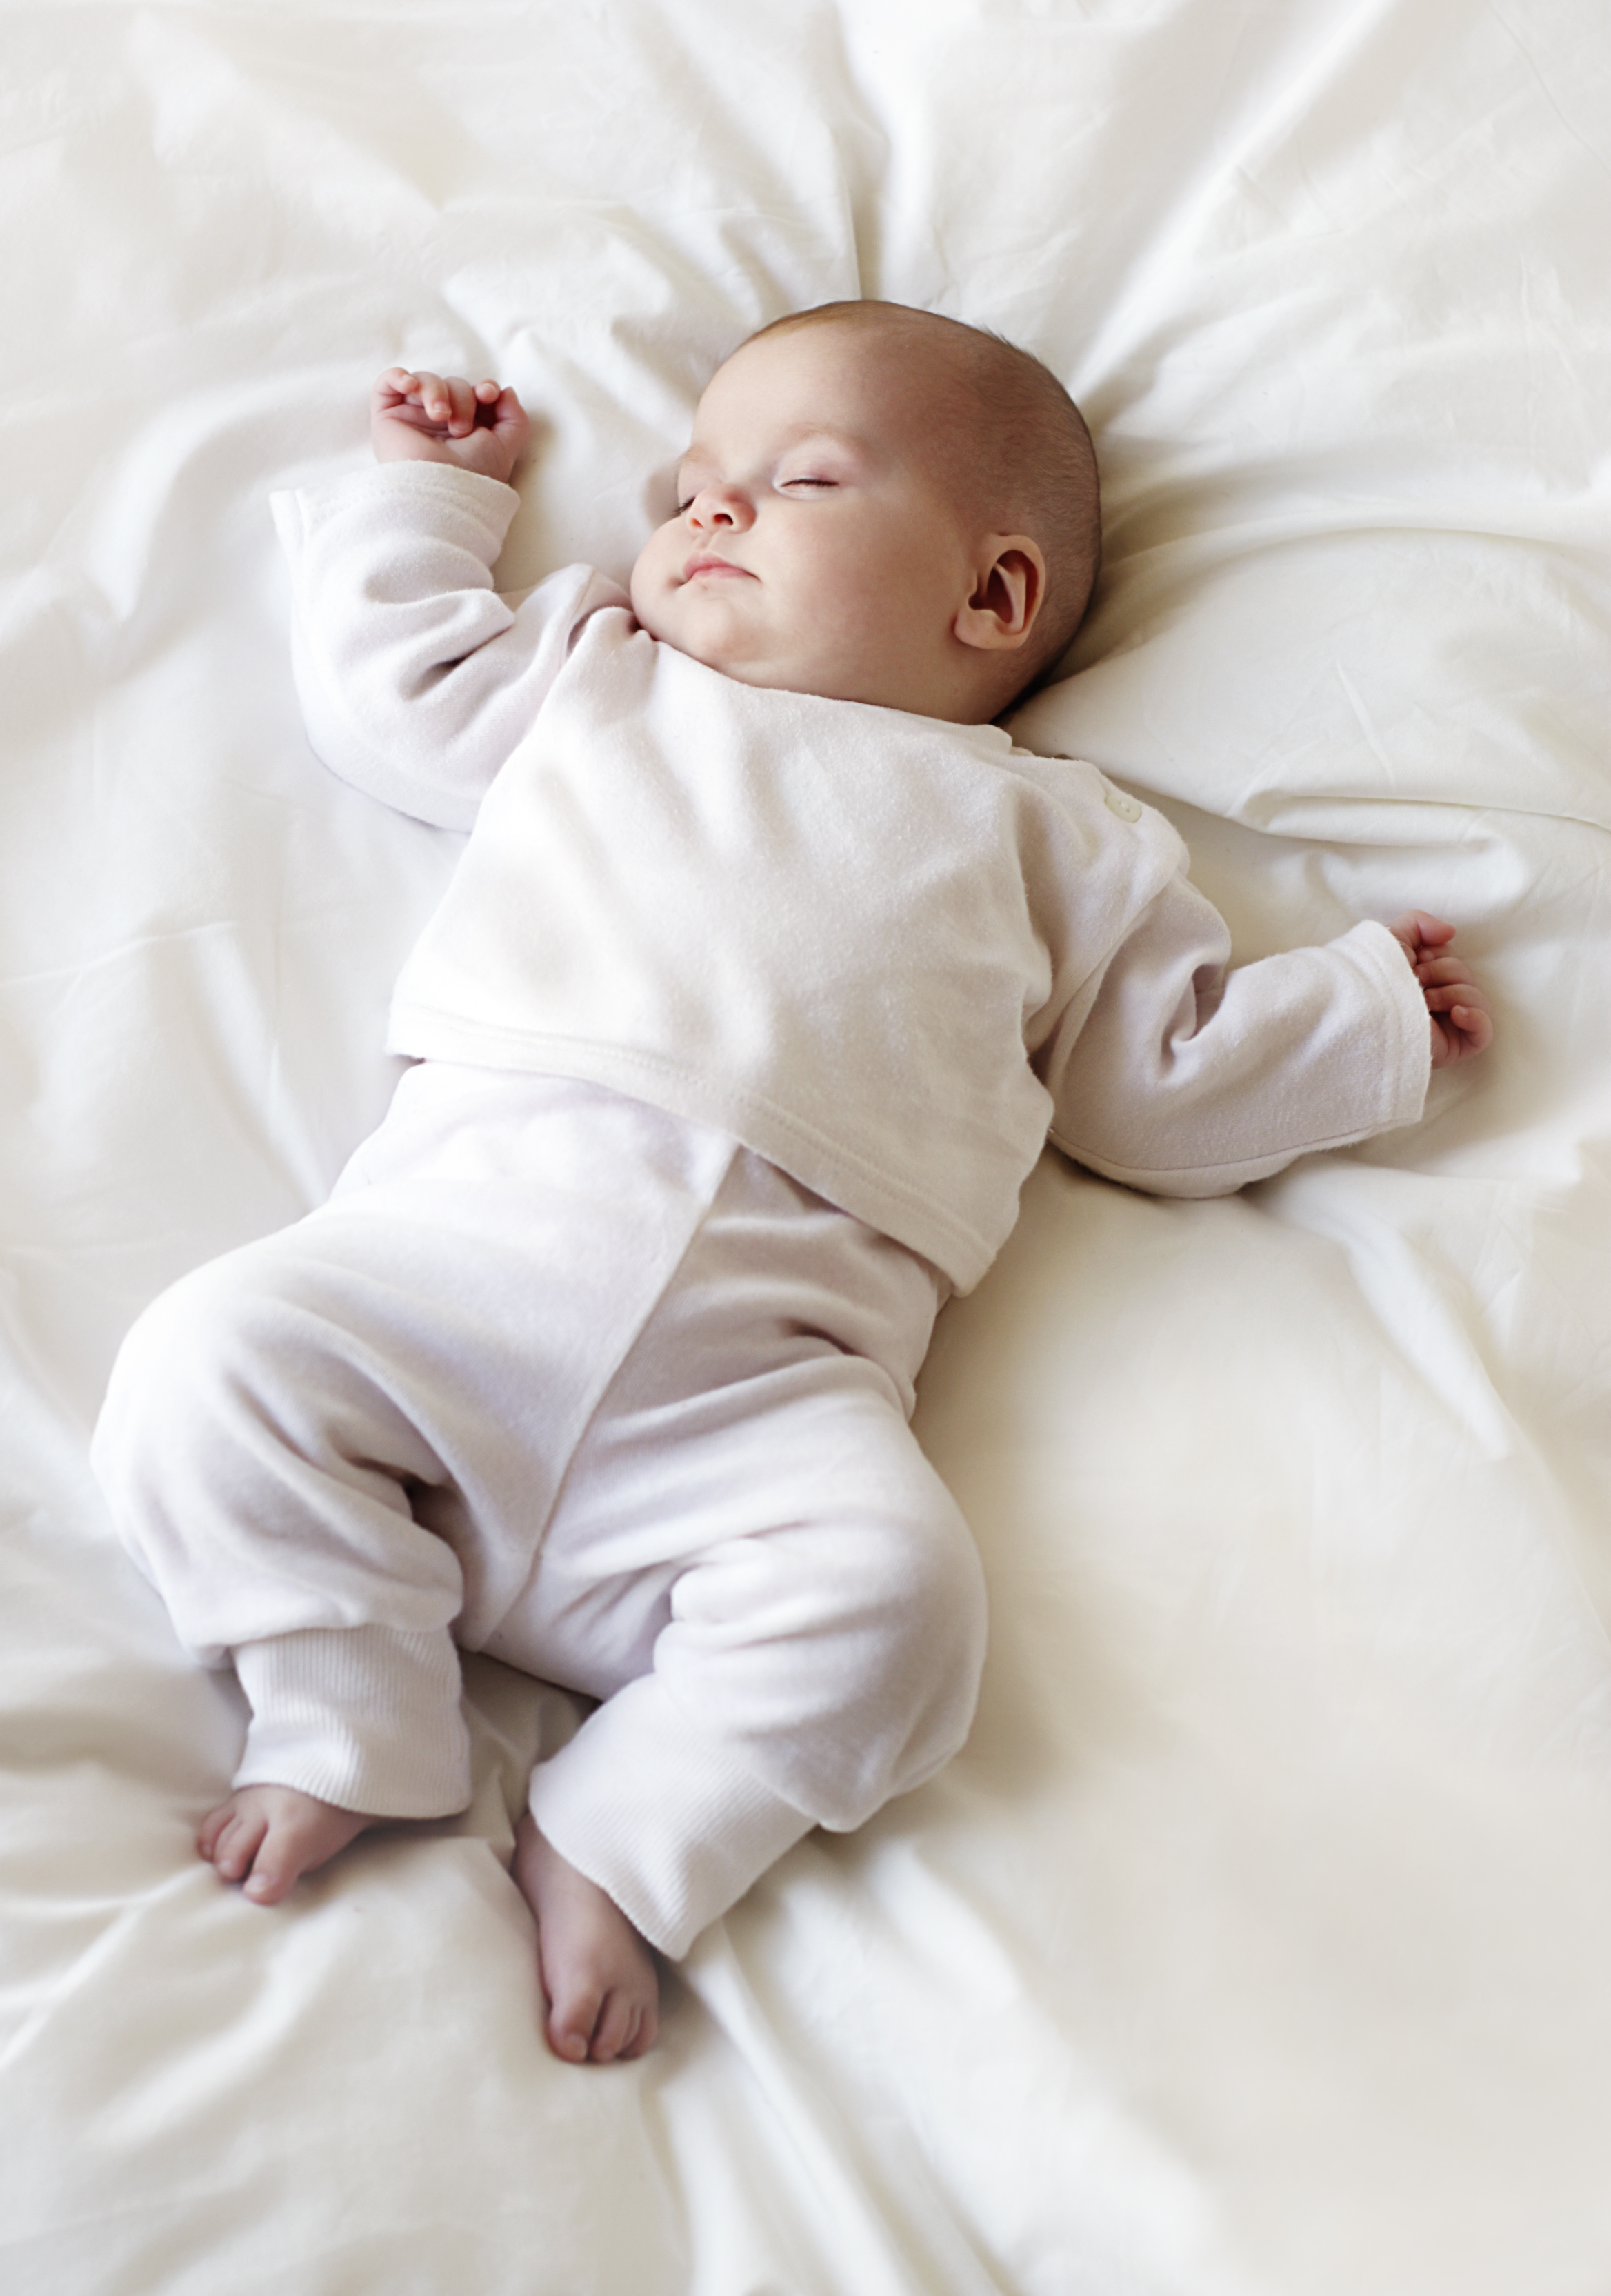 Coucher bébé : les petits rituels essentiels